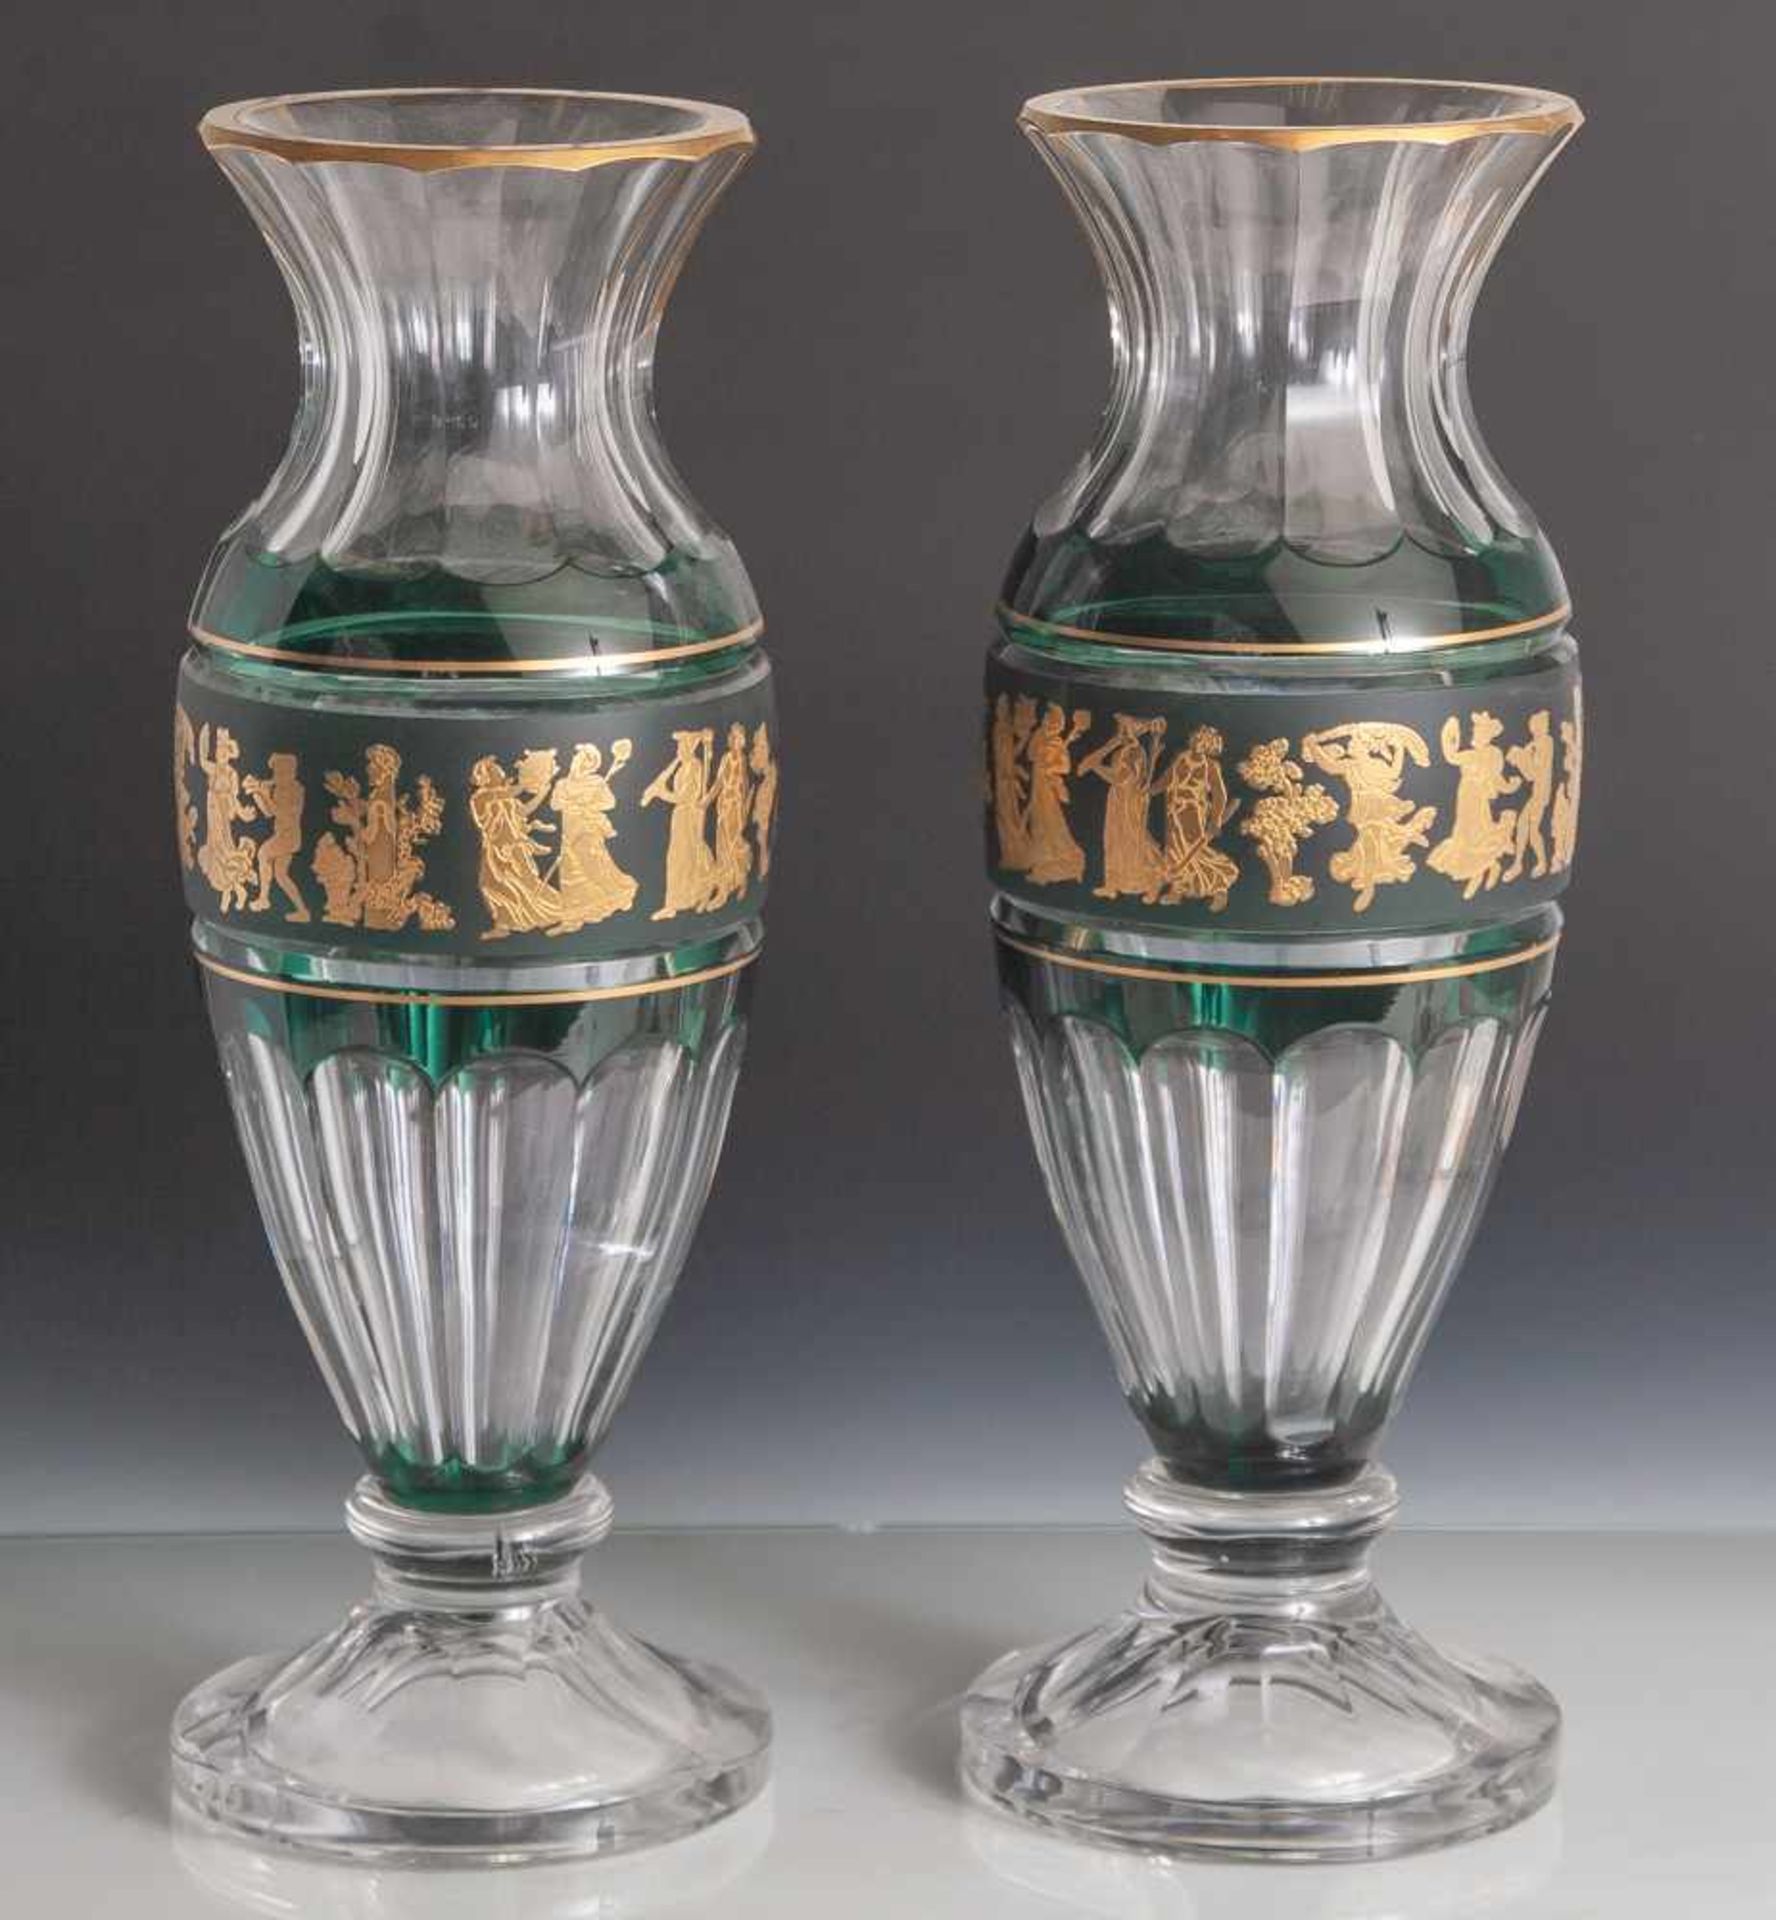 Paar Vasen, "Danse de Flor", Val St. Lambert, Belgien, 20. Jahrhundert, ovoide Grundform auf